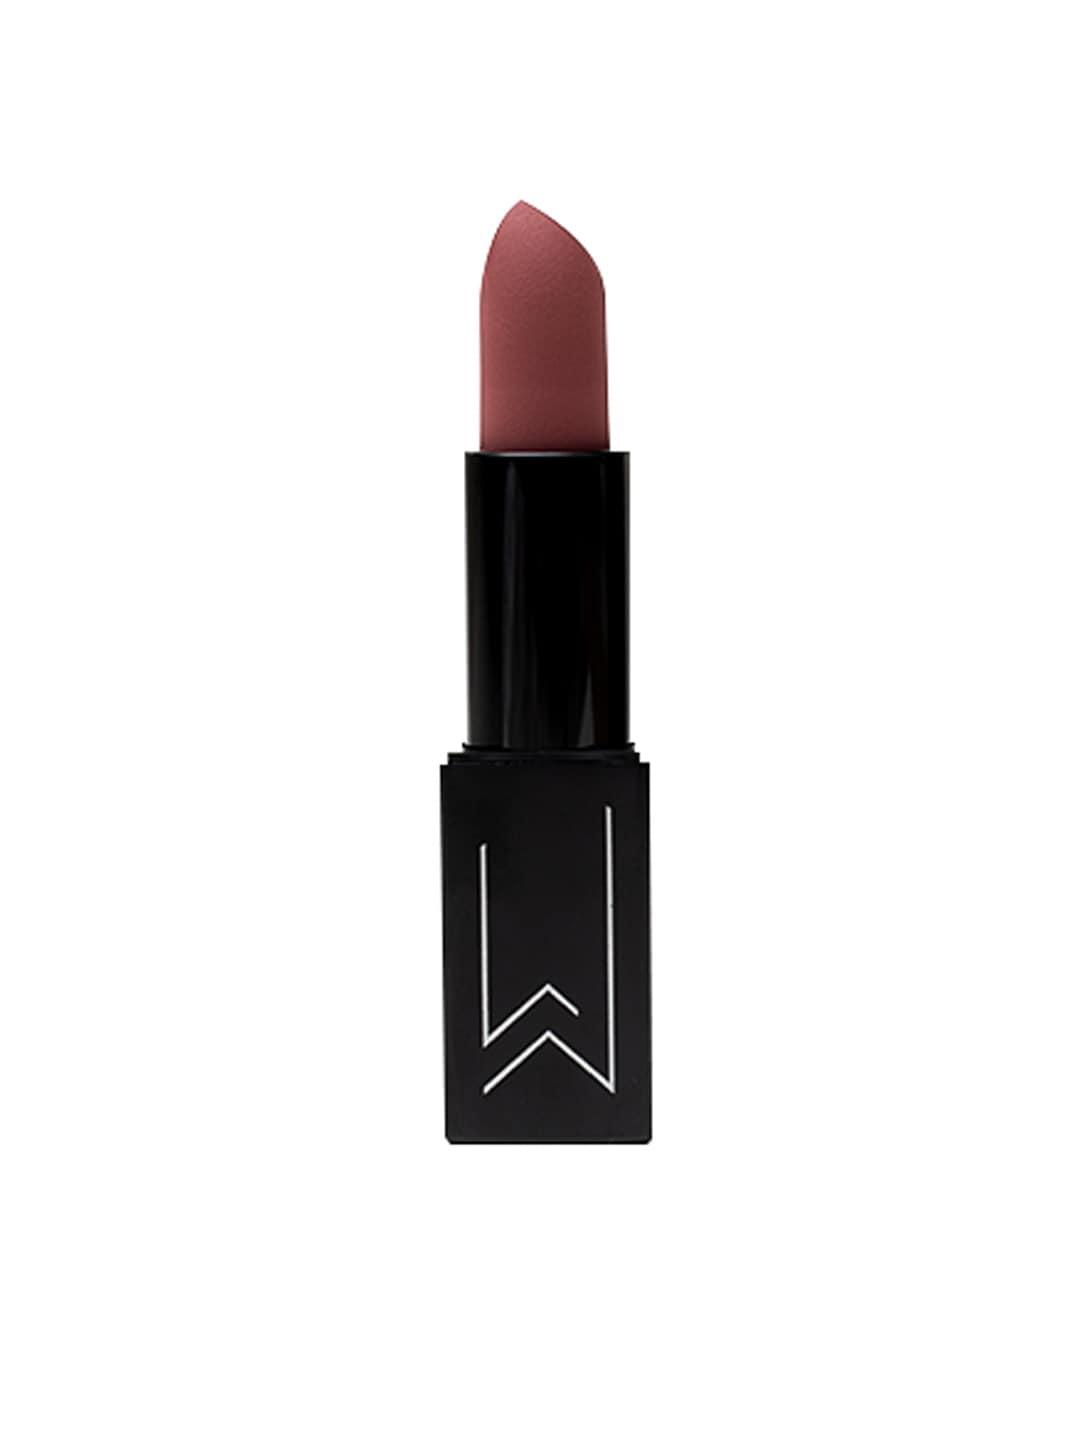 pac-long-lasting-full-pigment-matte-mischief-lipstick---wild-grape-11